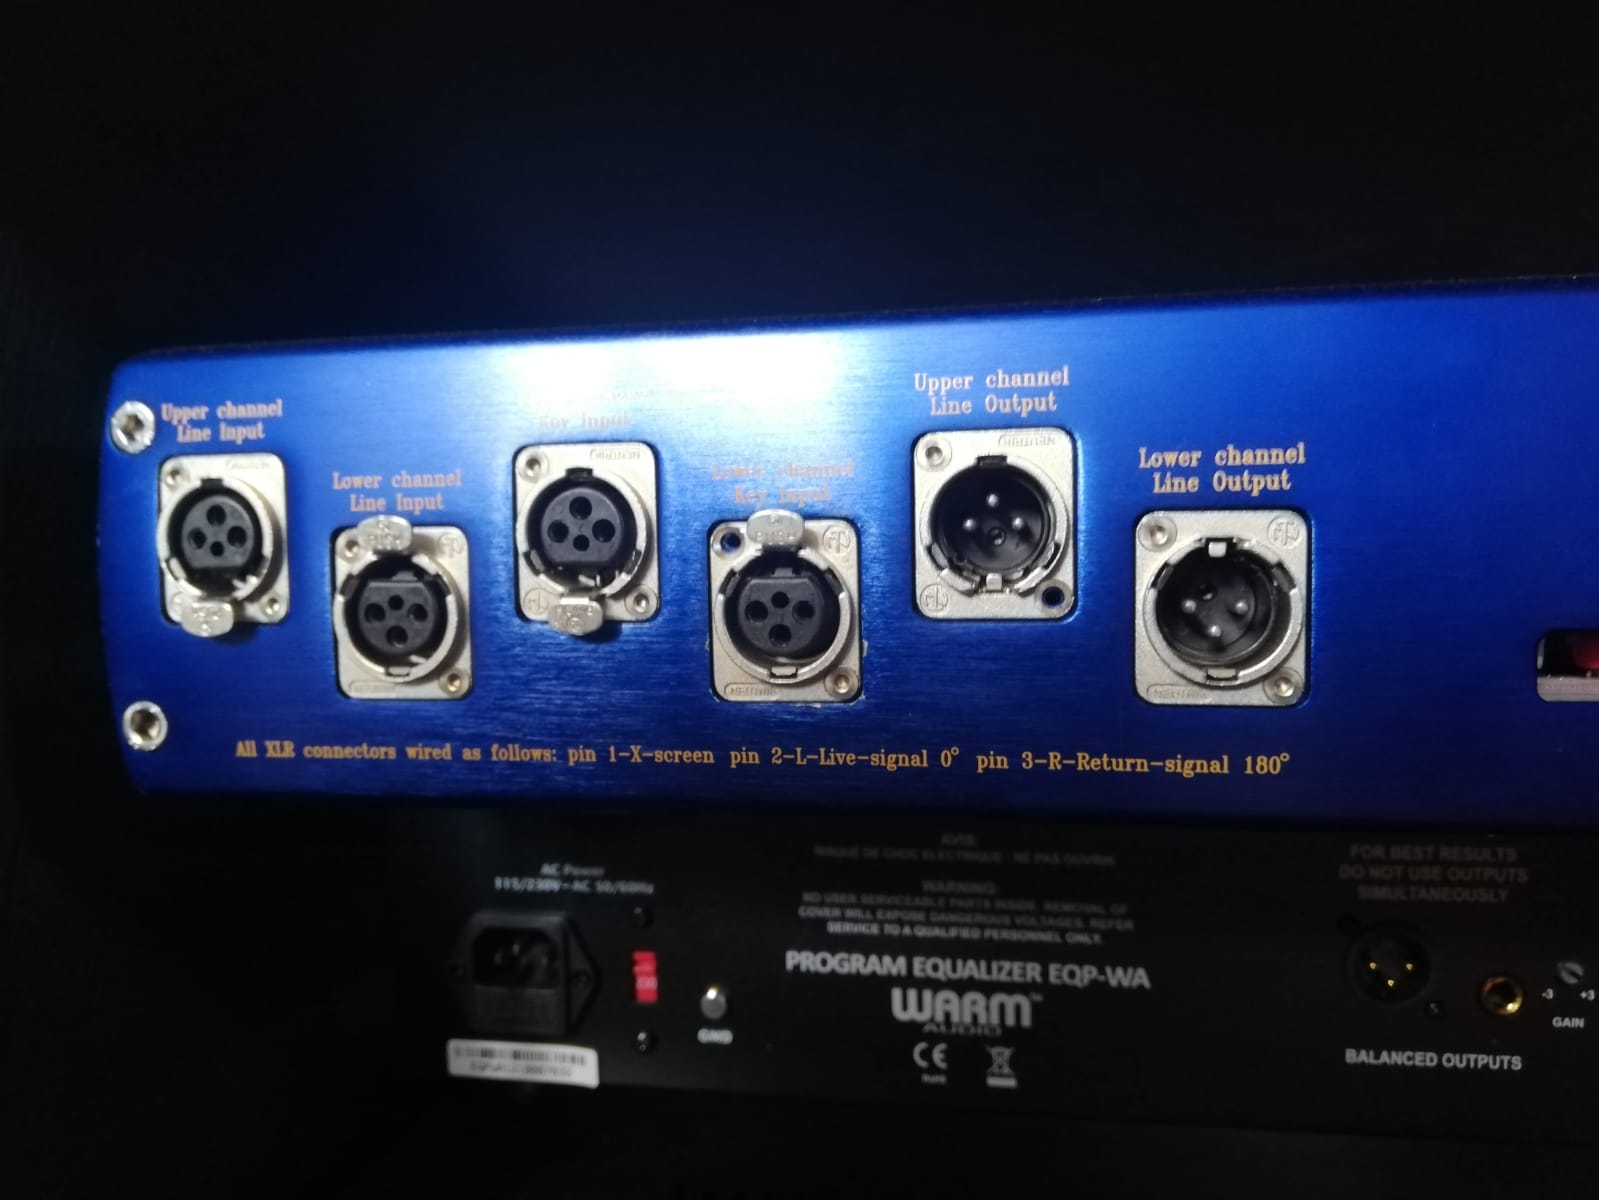 Focusrite Blue 230 dual mono / stereo compressor & limiter - Preowned